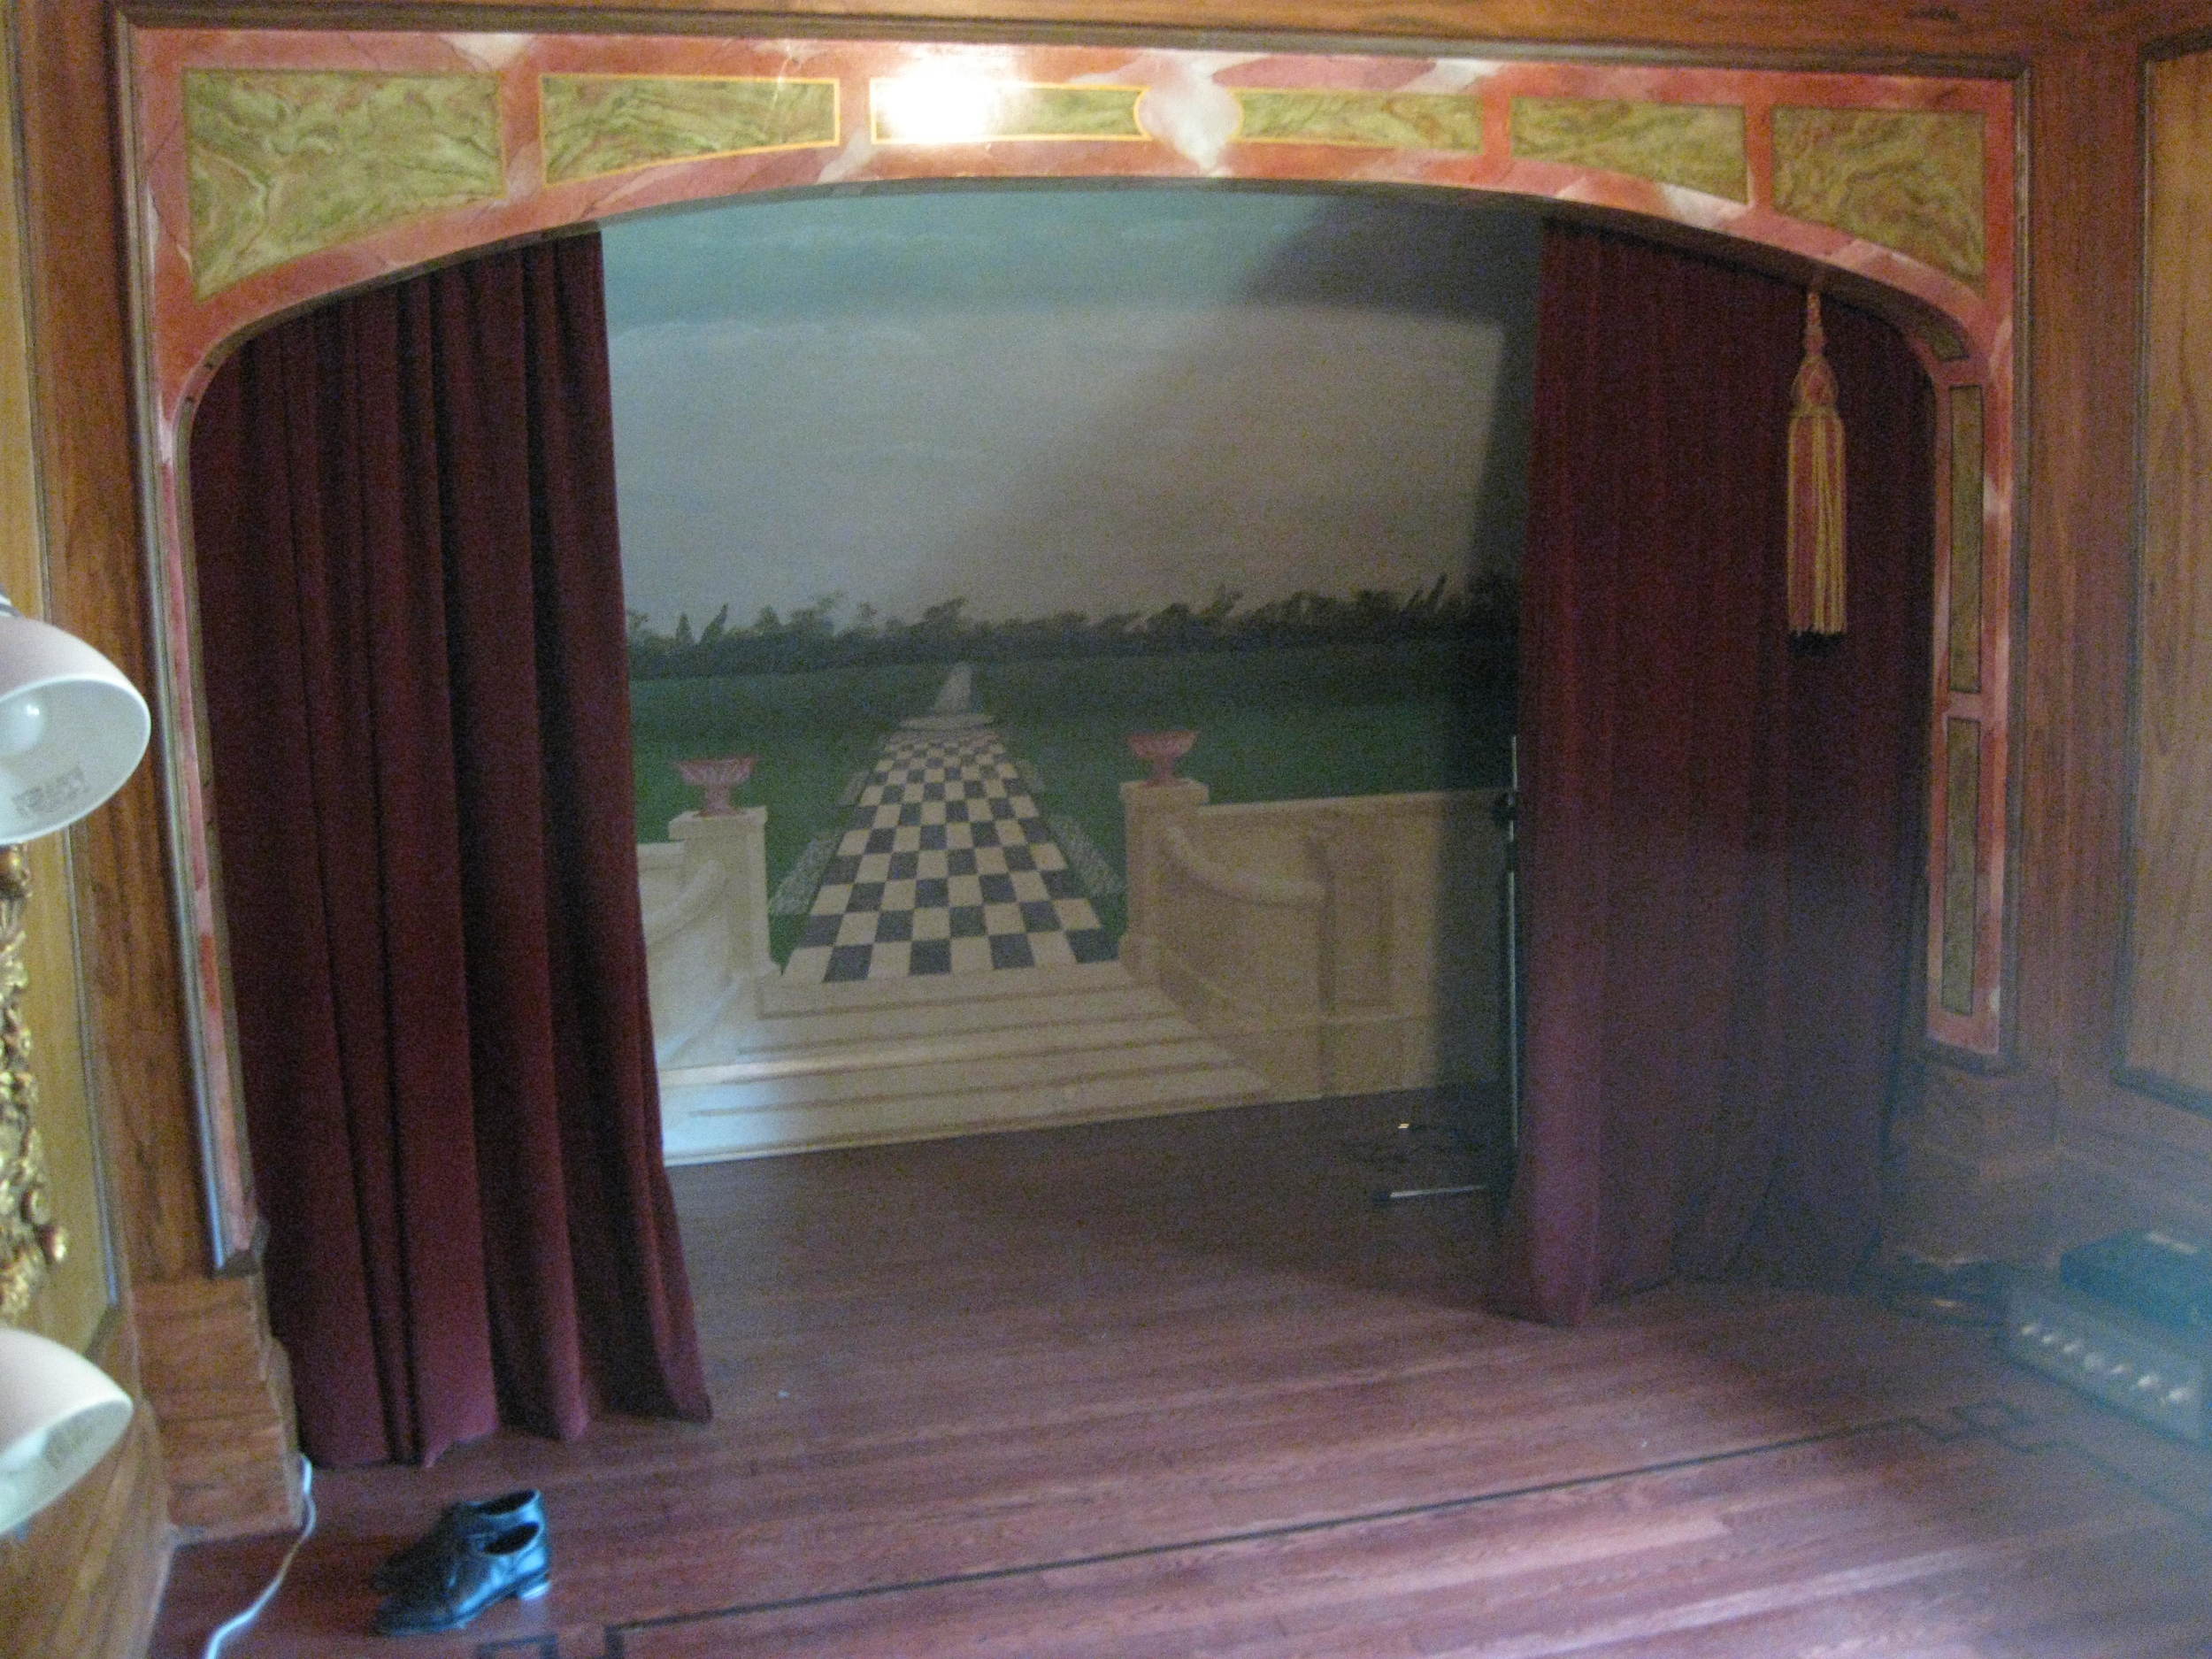 Room to Mimic 19th Century Vaudeville Theatre